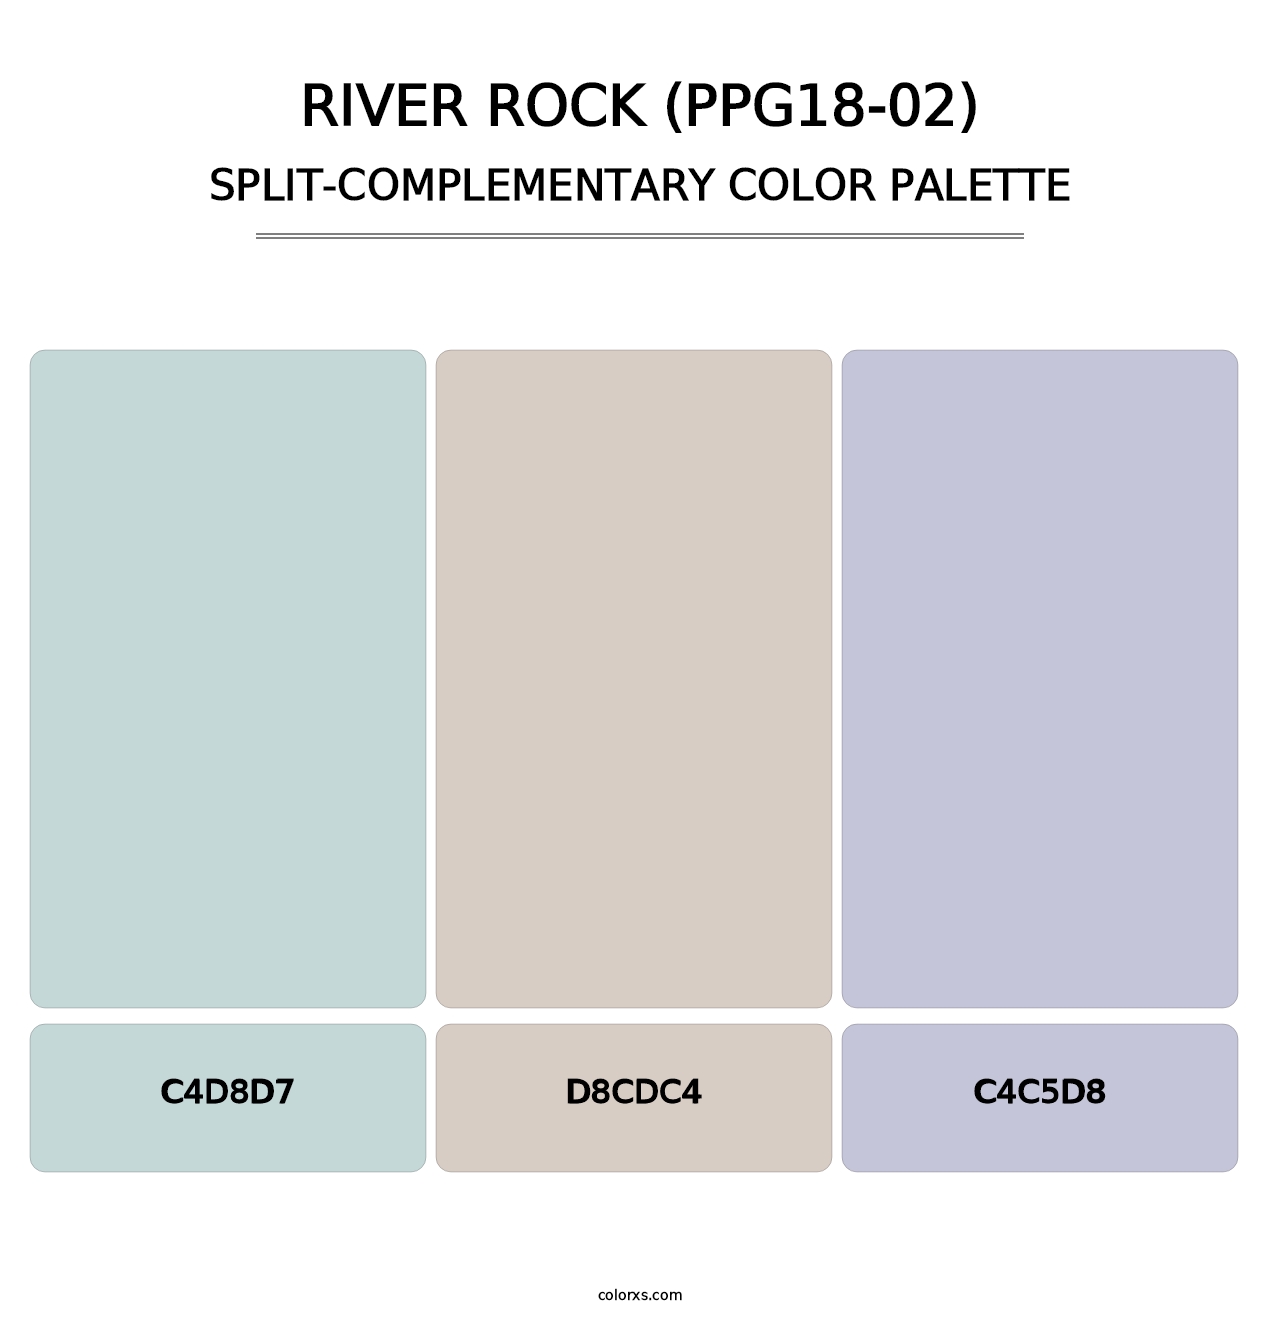 River Rock (PPG18-02) - Split-Complementary Color Palette